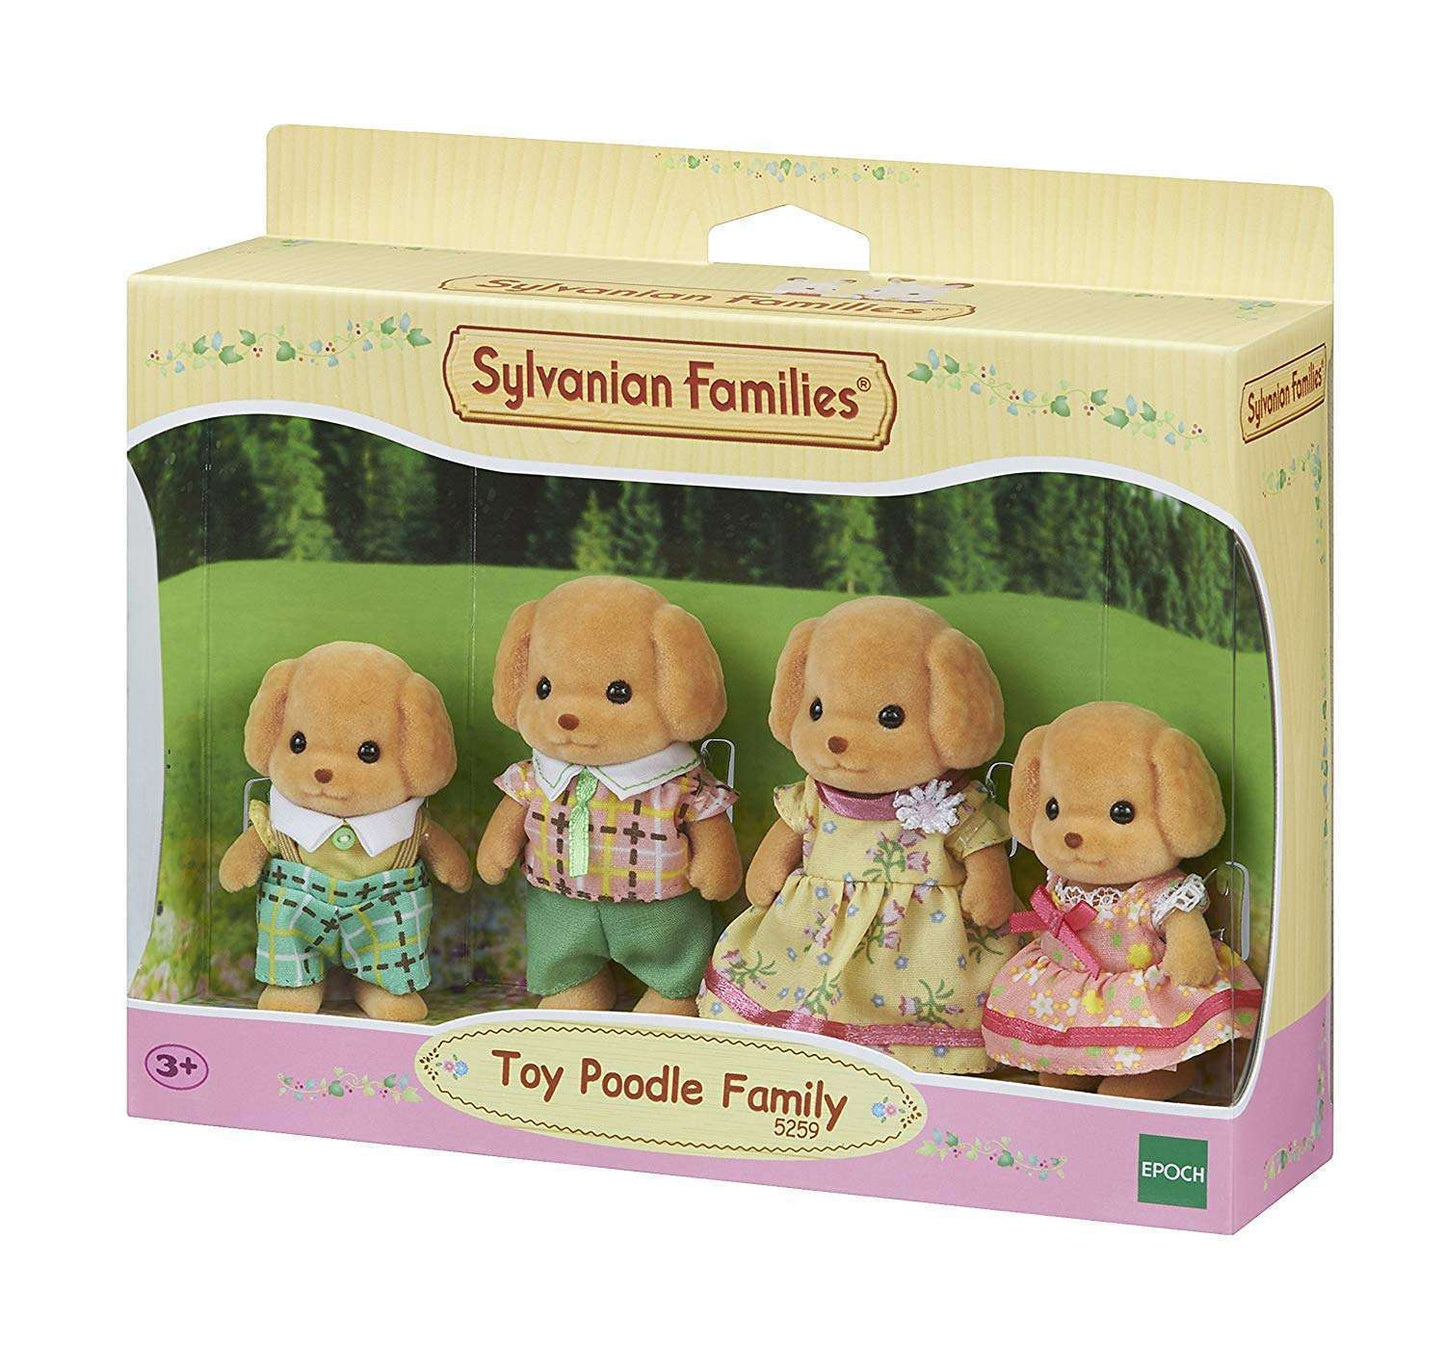 Sylvanian Families - Toy Poodle Family - 5259